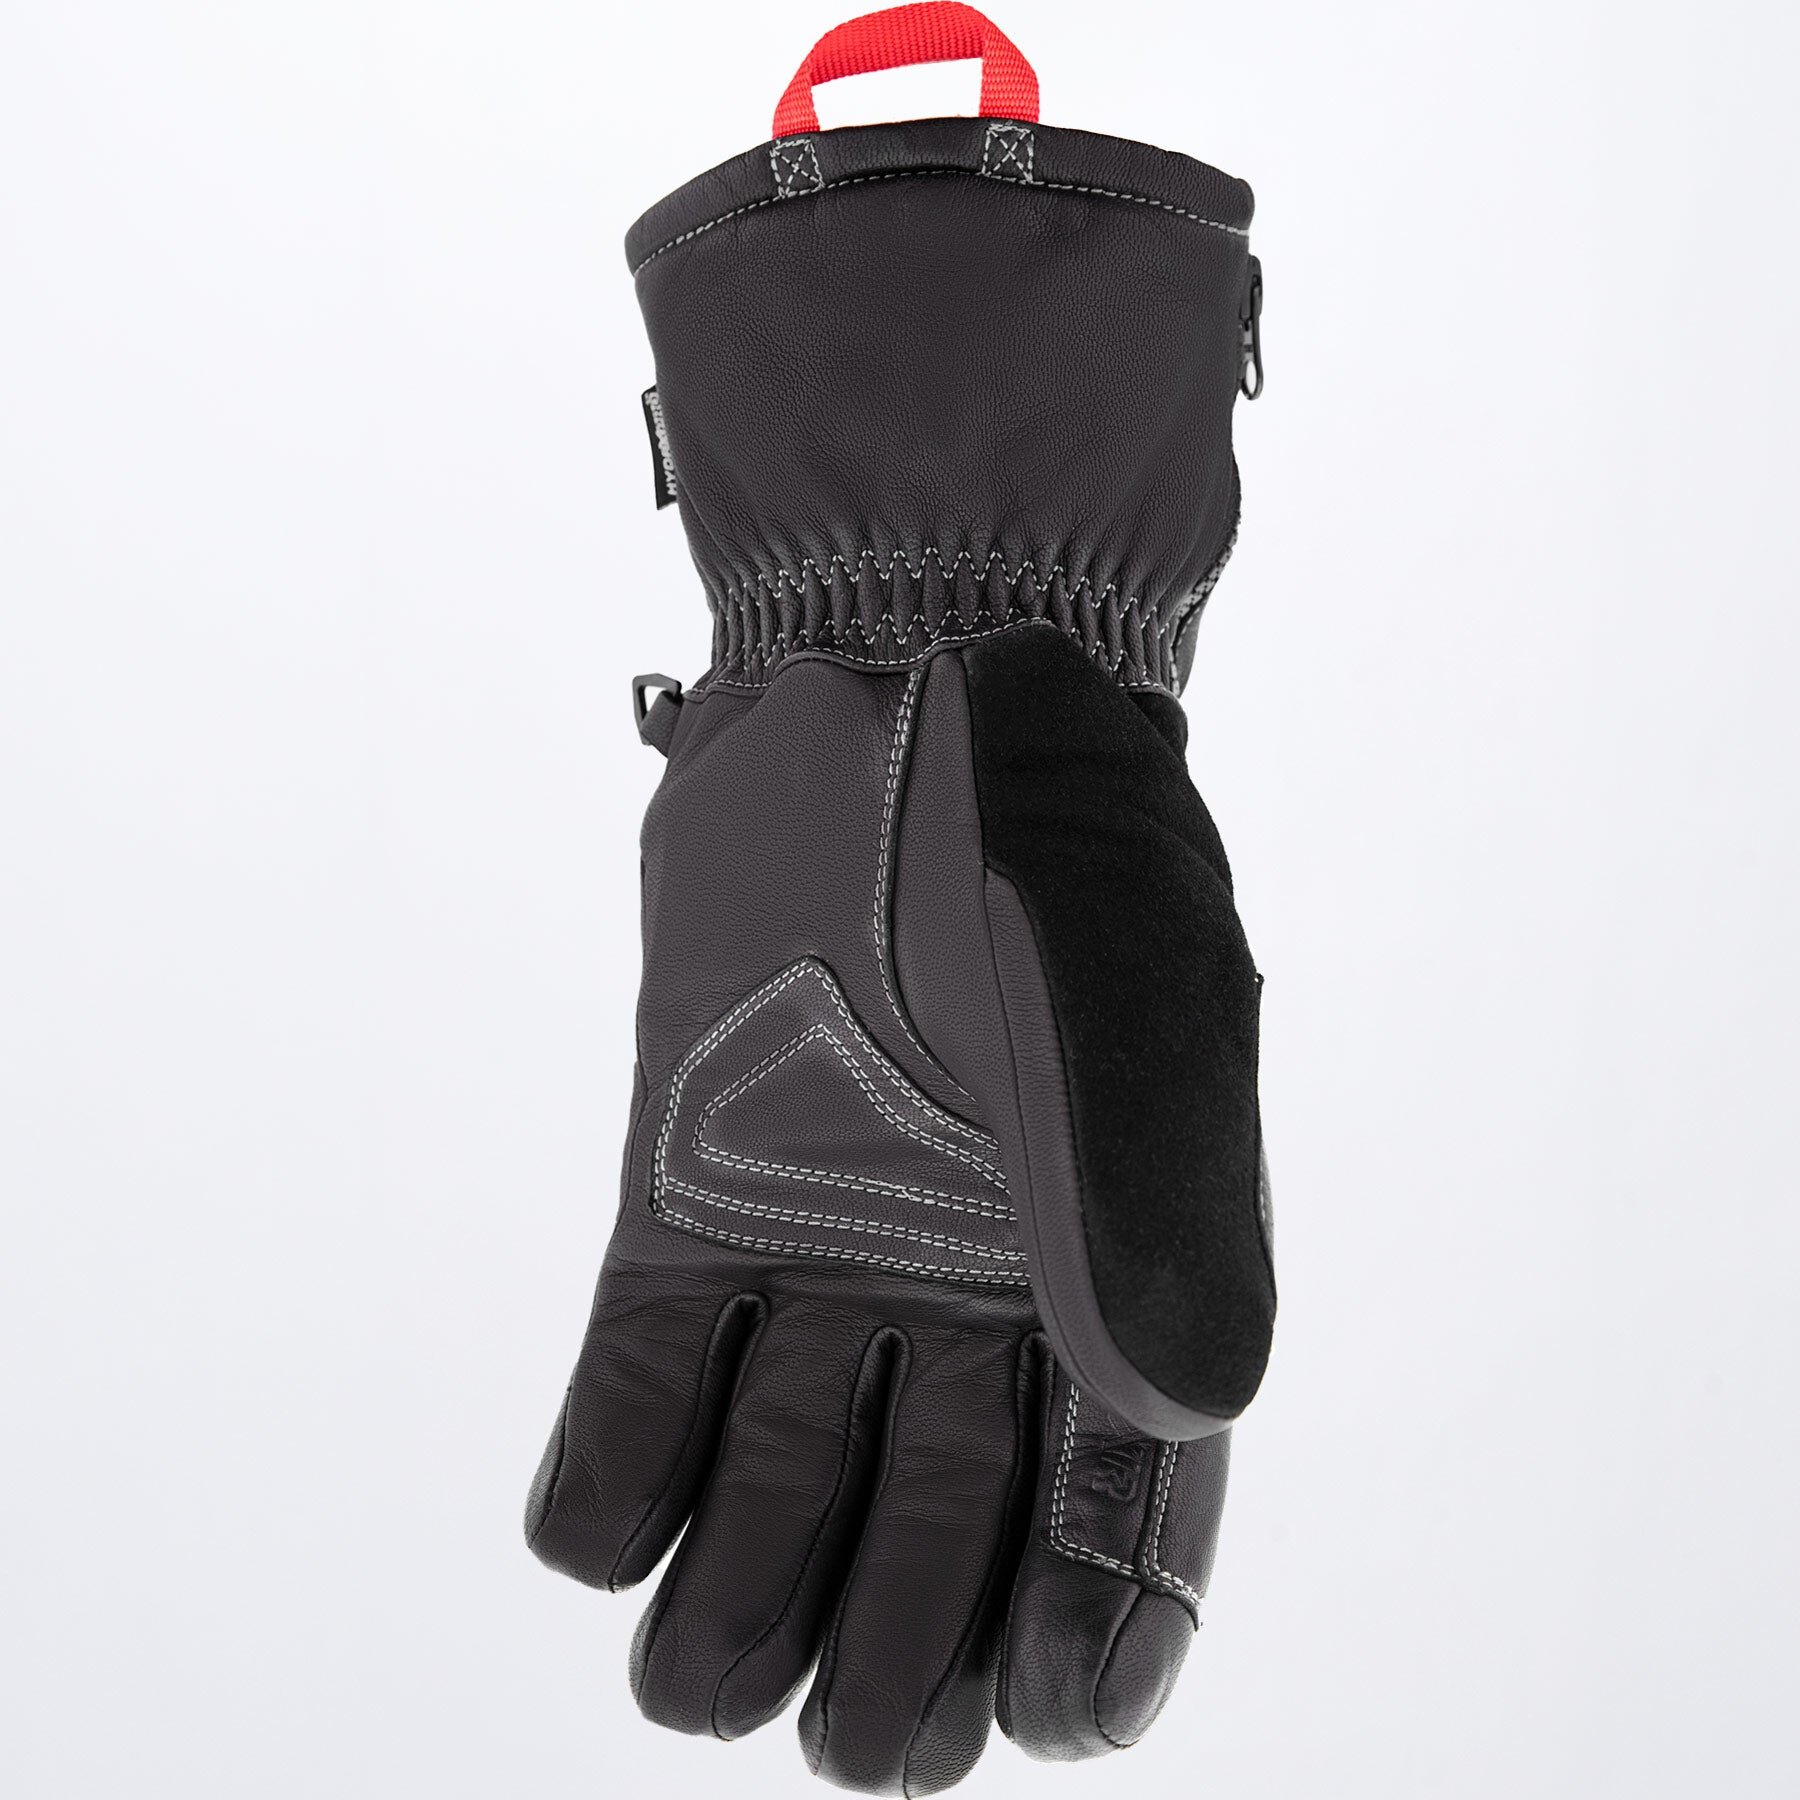 Men's Leather Short Cuff Glove S Black